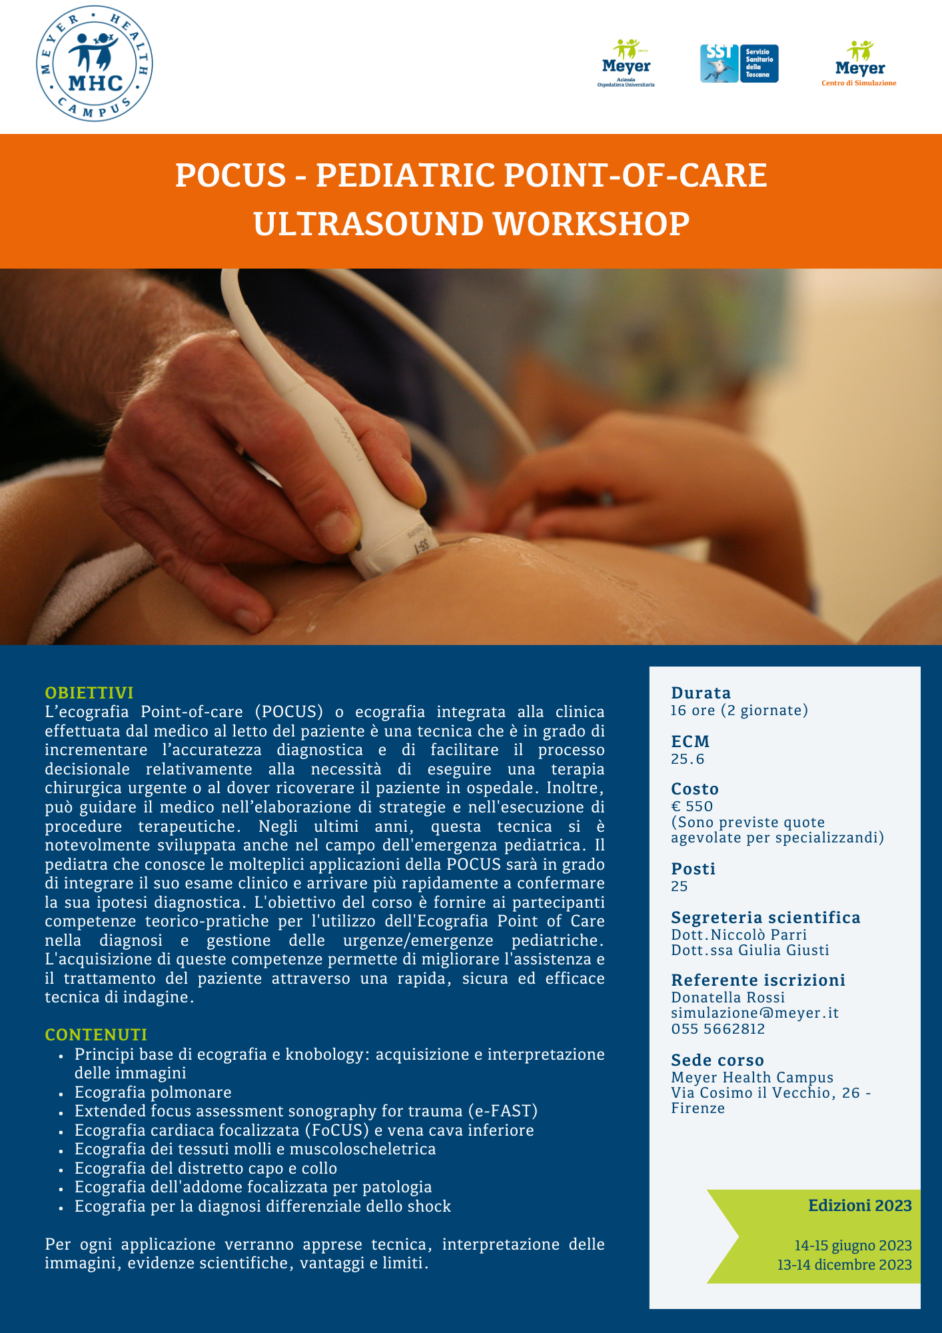 POCUS – Pediatric point-of-care ultrasound workshop (13-14 dicembre 2023)